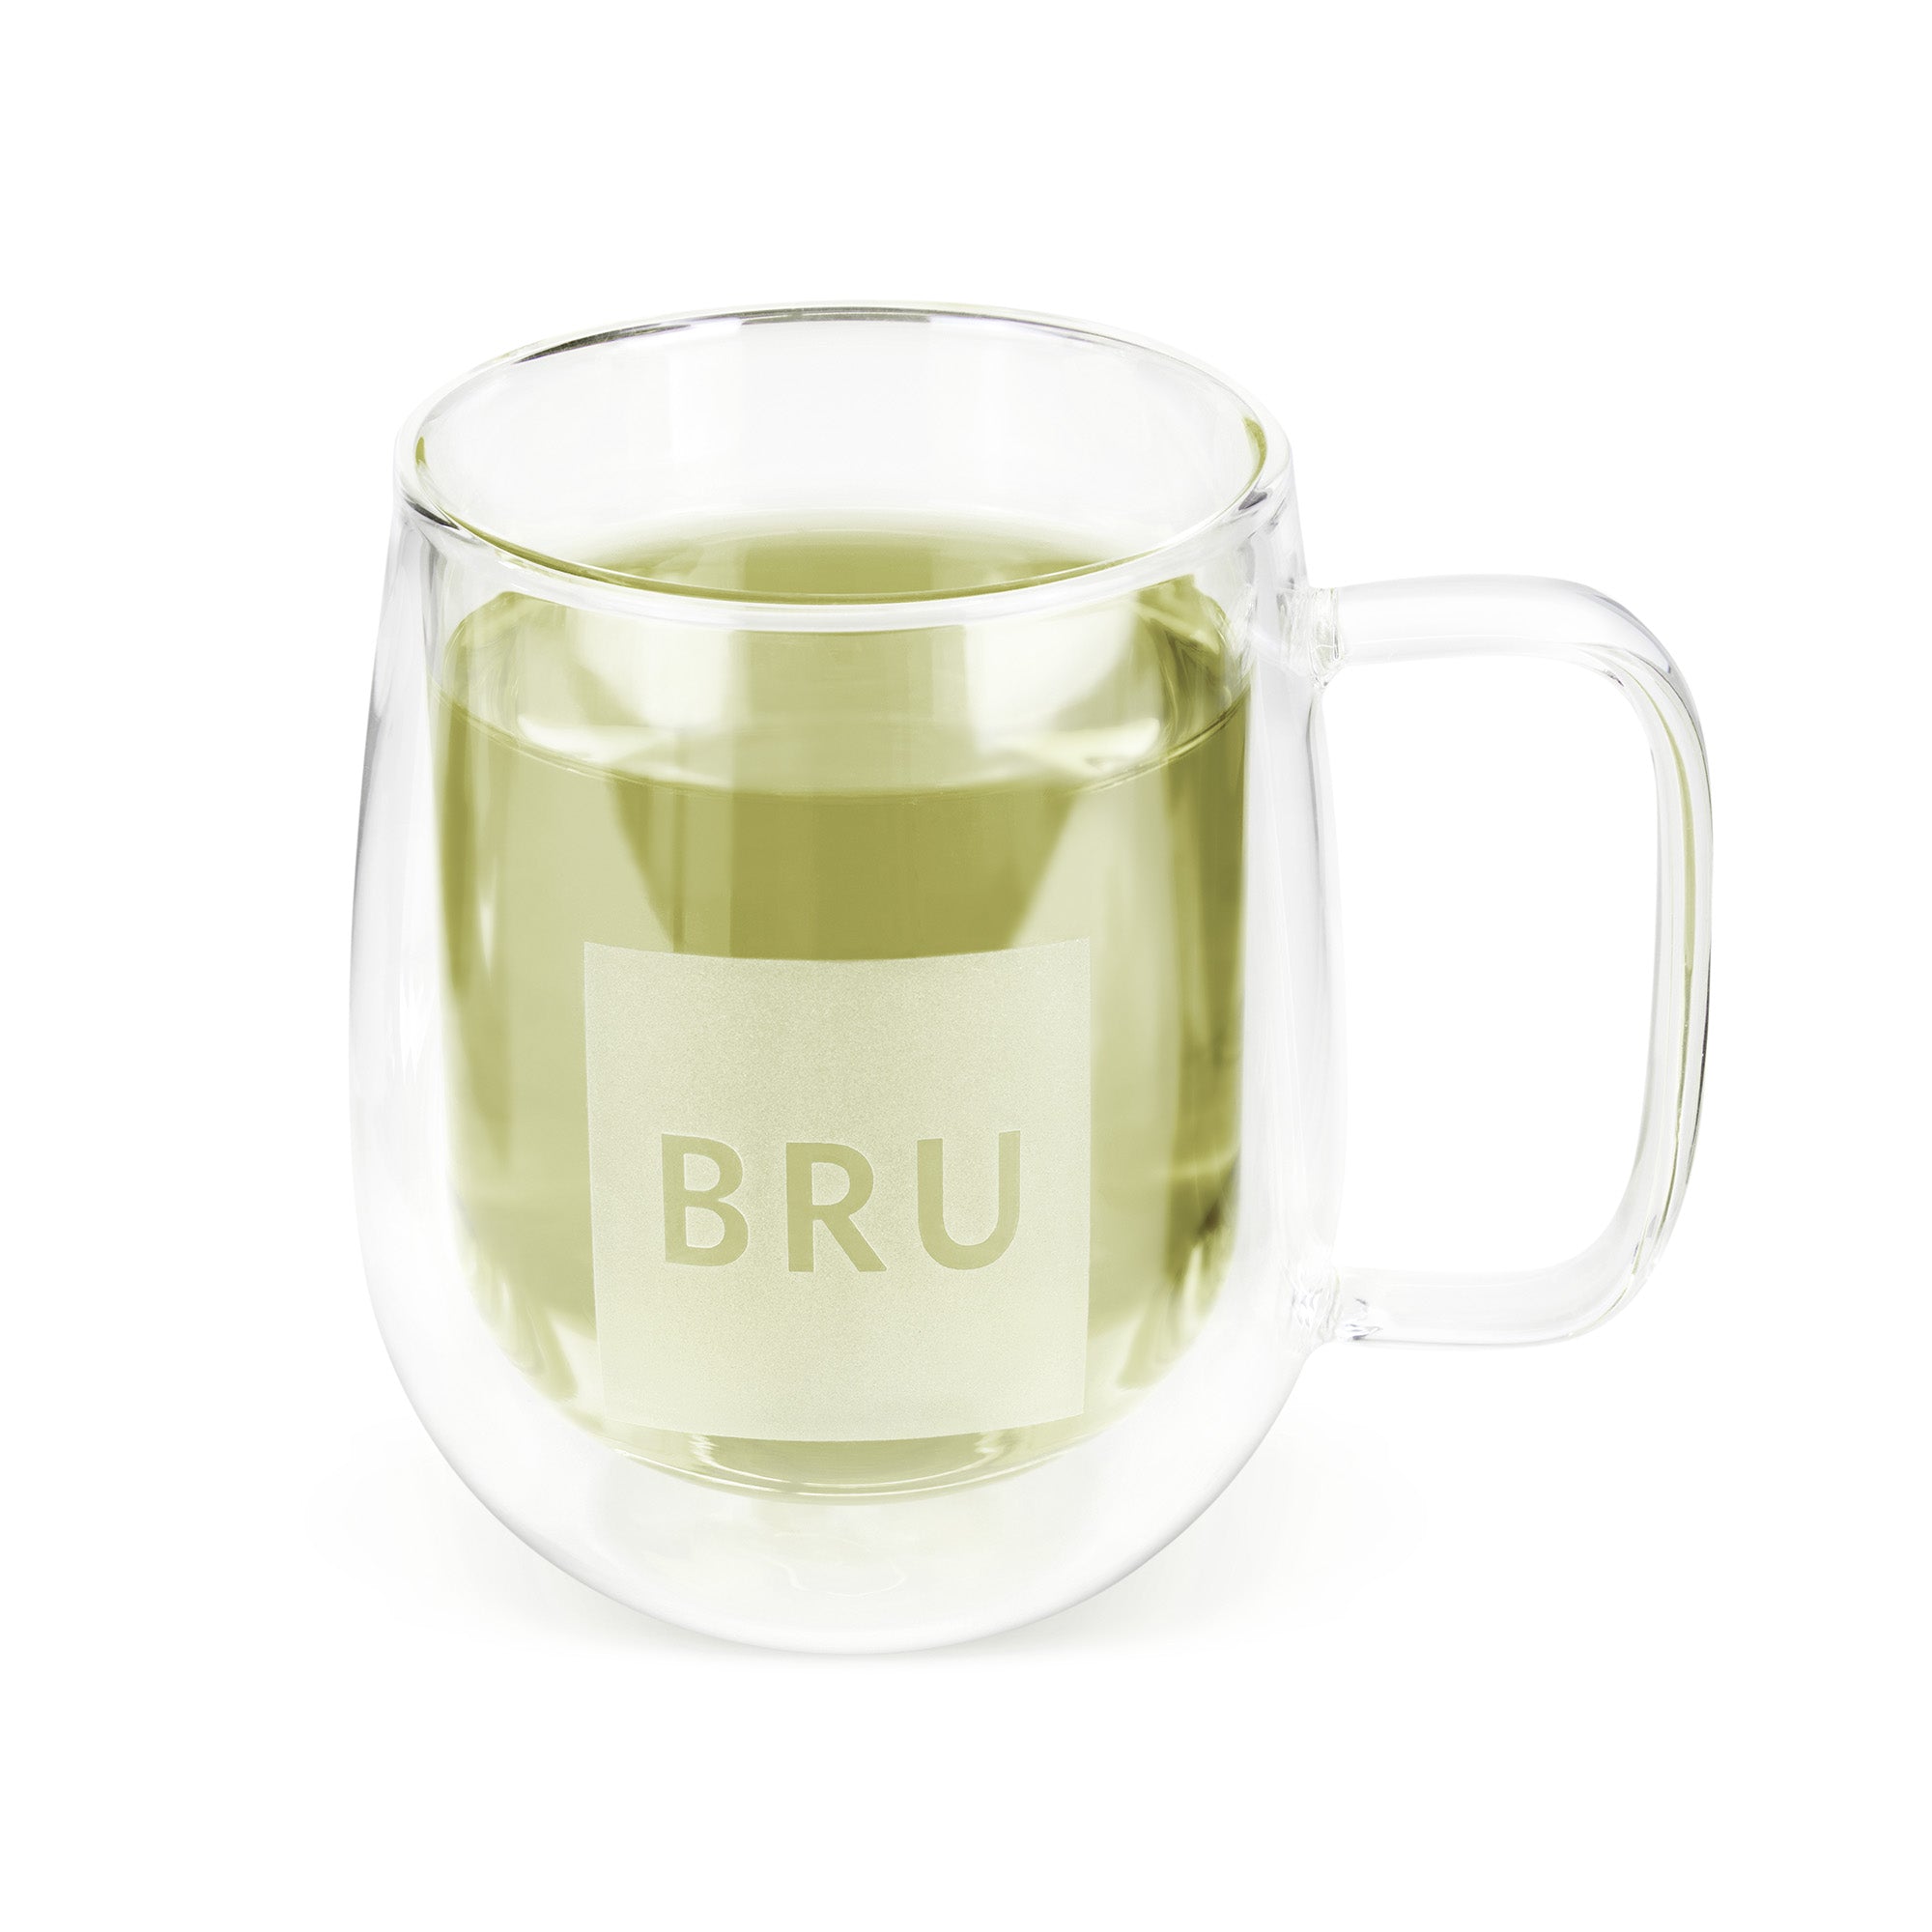 BIO - Green tea Sencha from Japan